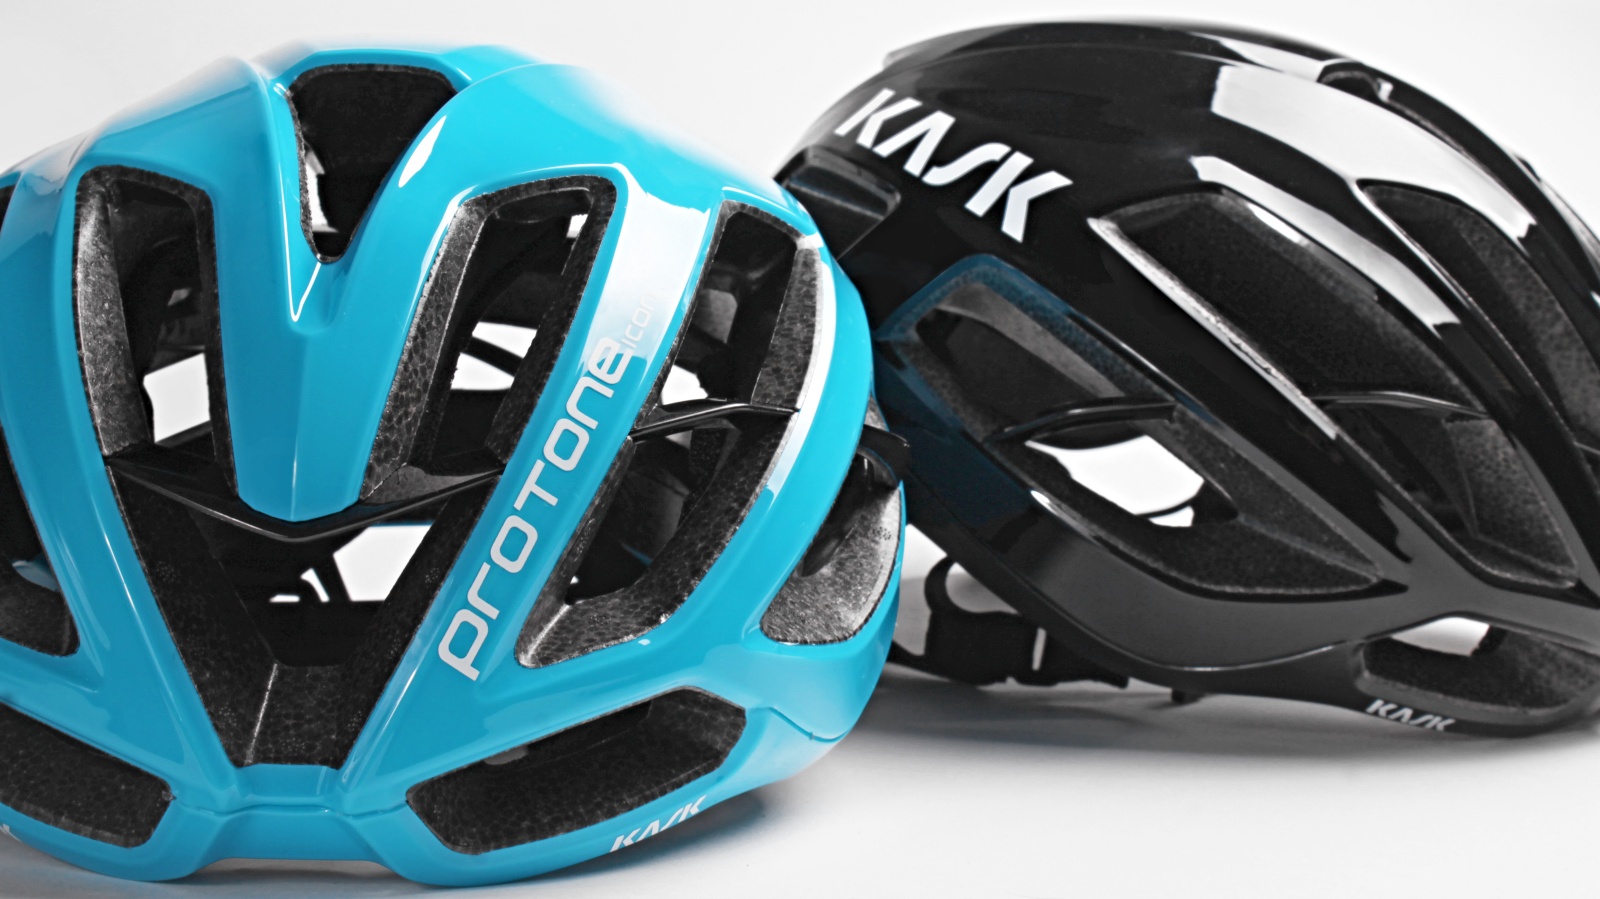 NEW Kask PROTONE ICON Road Cycling Helmet : GLOSS LIGHT BLUE